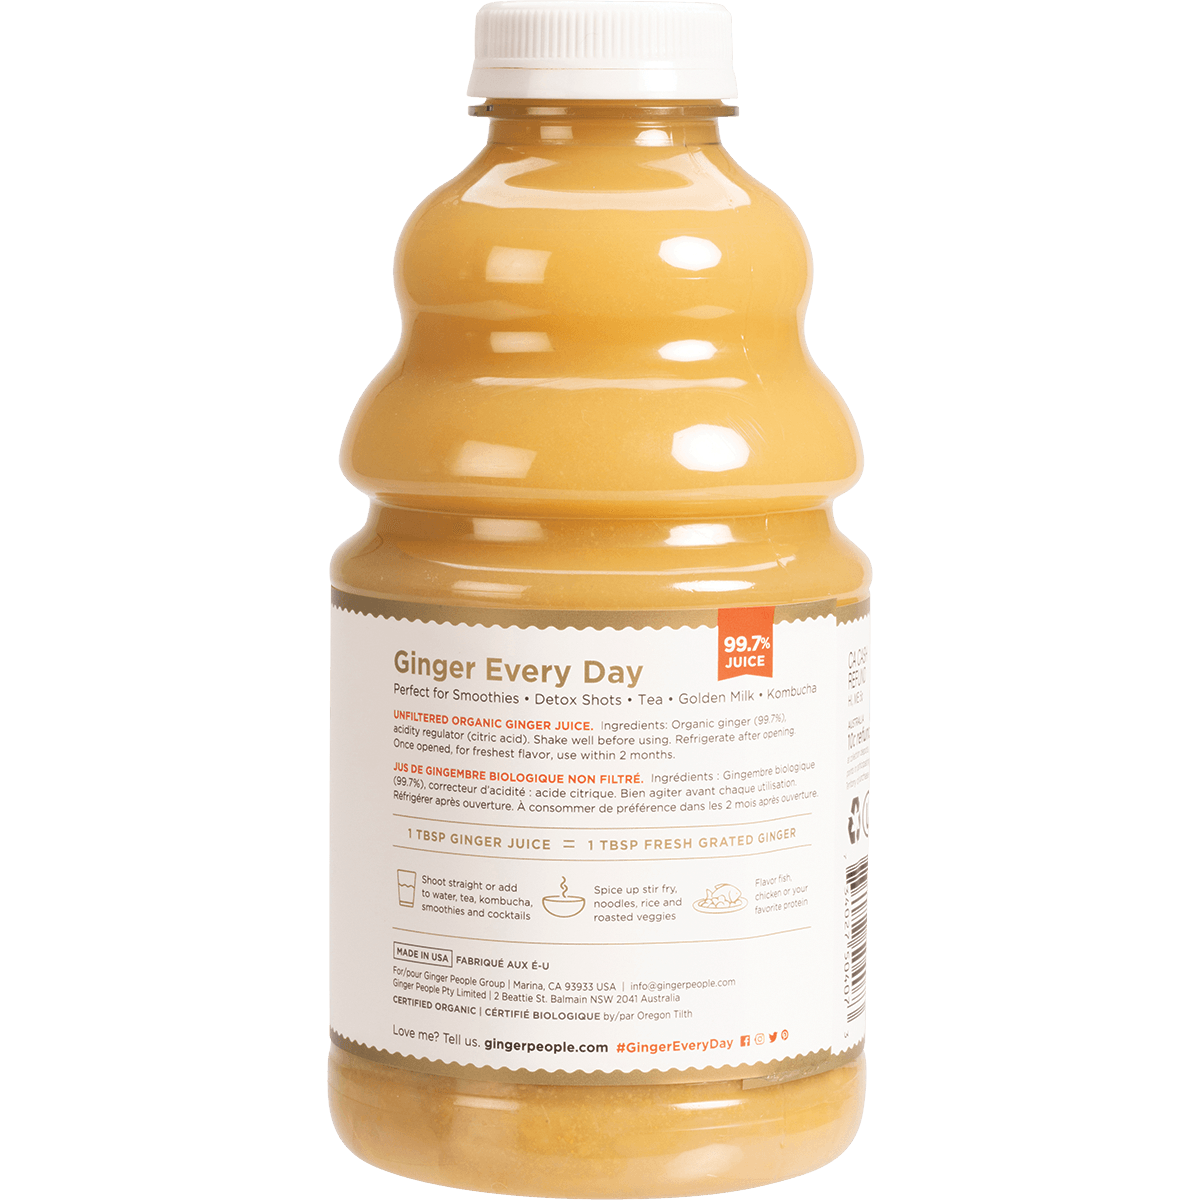 The Ginger People Organic Ginger Juice 946ml - QVM Vitamins™